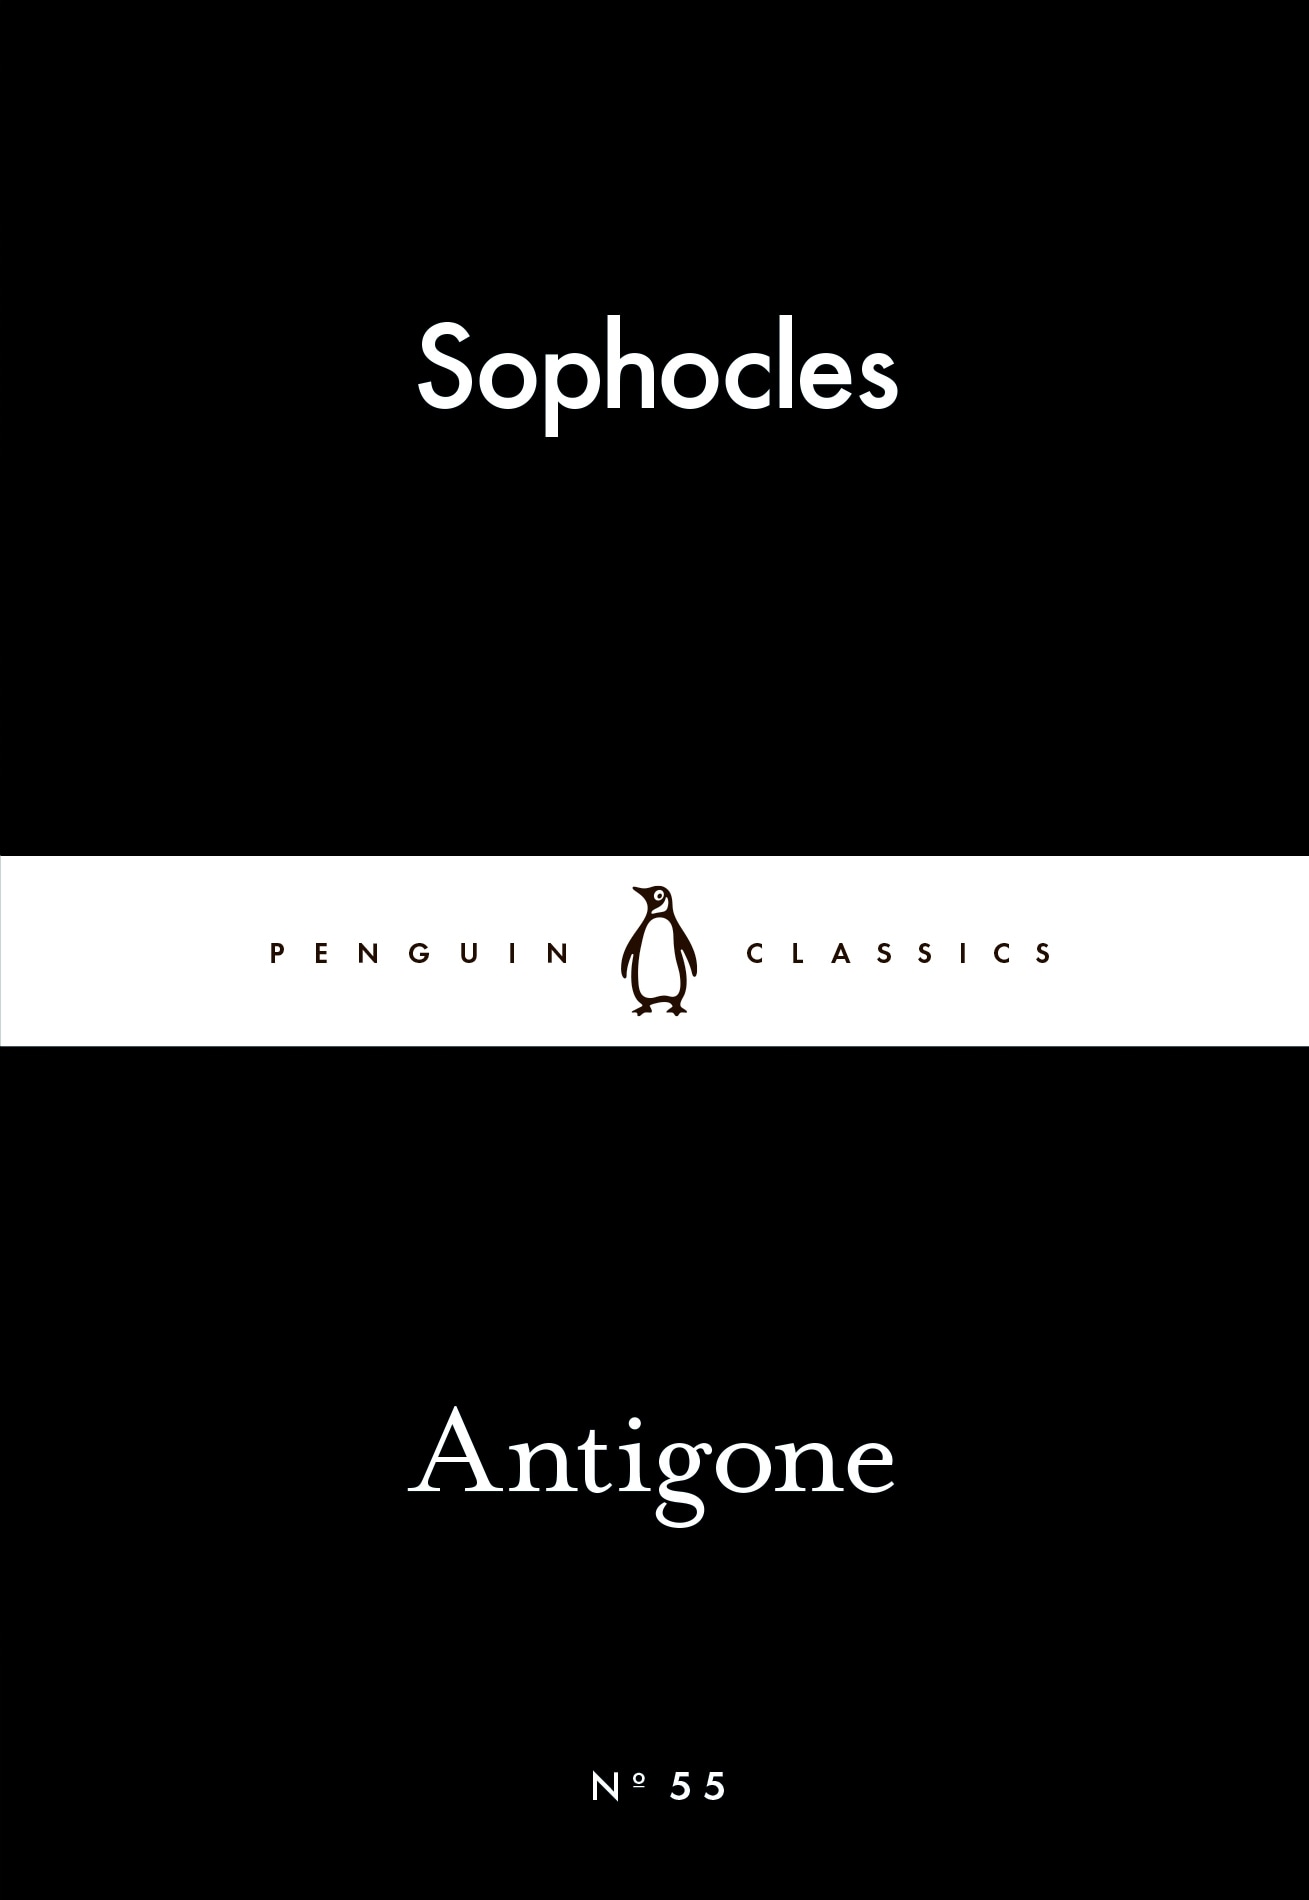 Book “Antigone” by Sophocles — February 26, 2015